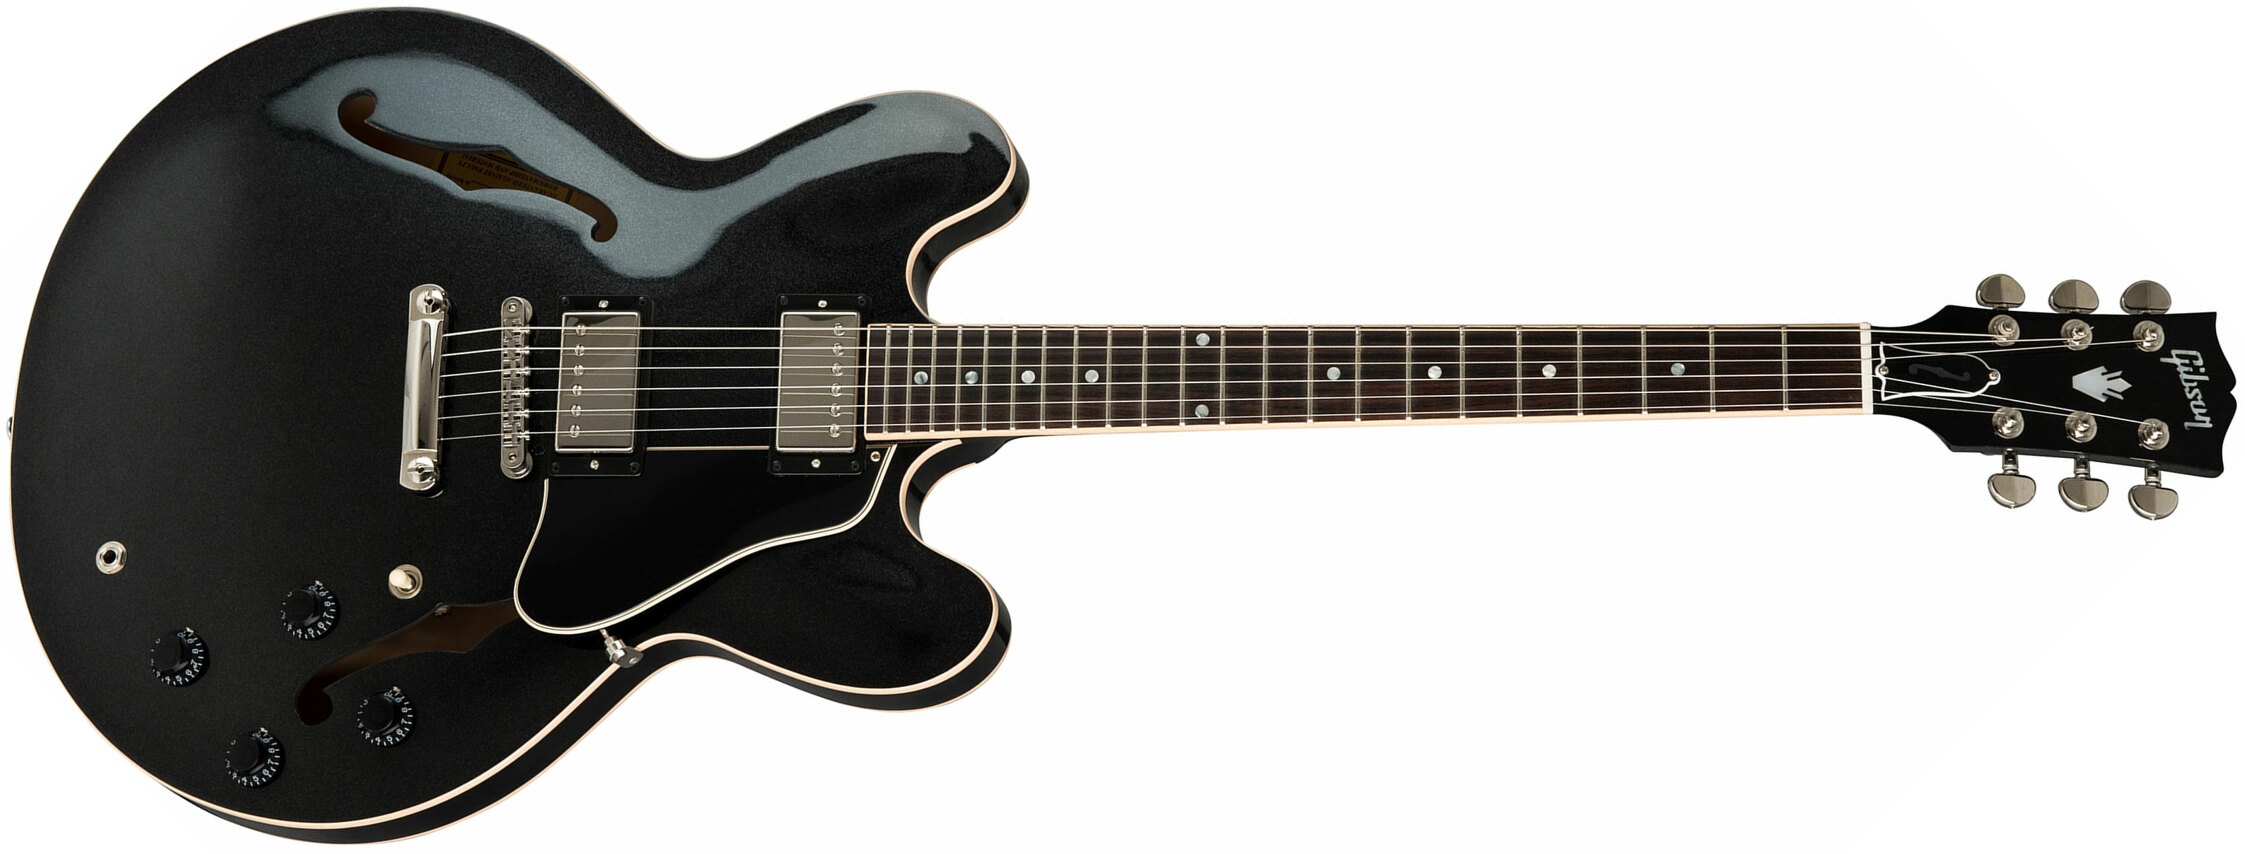 Gibson Es-335 Dot 2019 Hh Ht Rw - Graphite Metallic - Semi hollow elektriche gitaar - Main picture